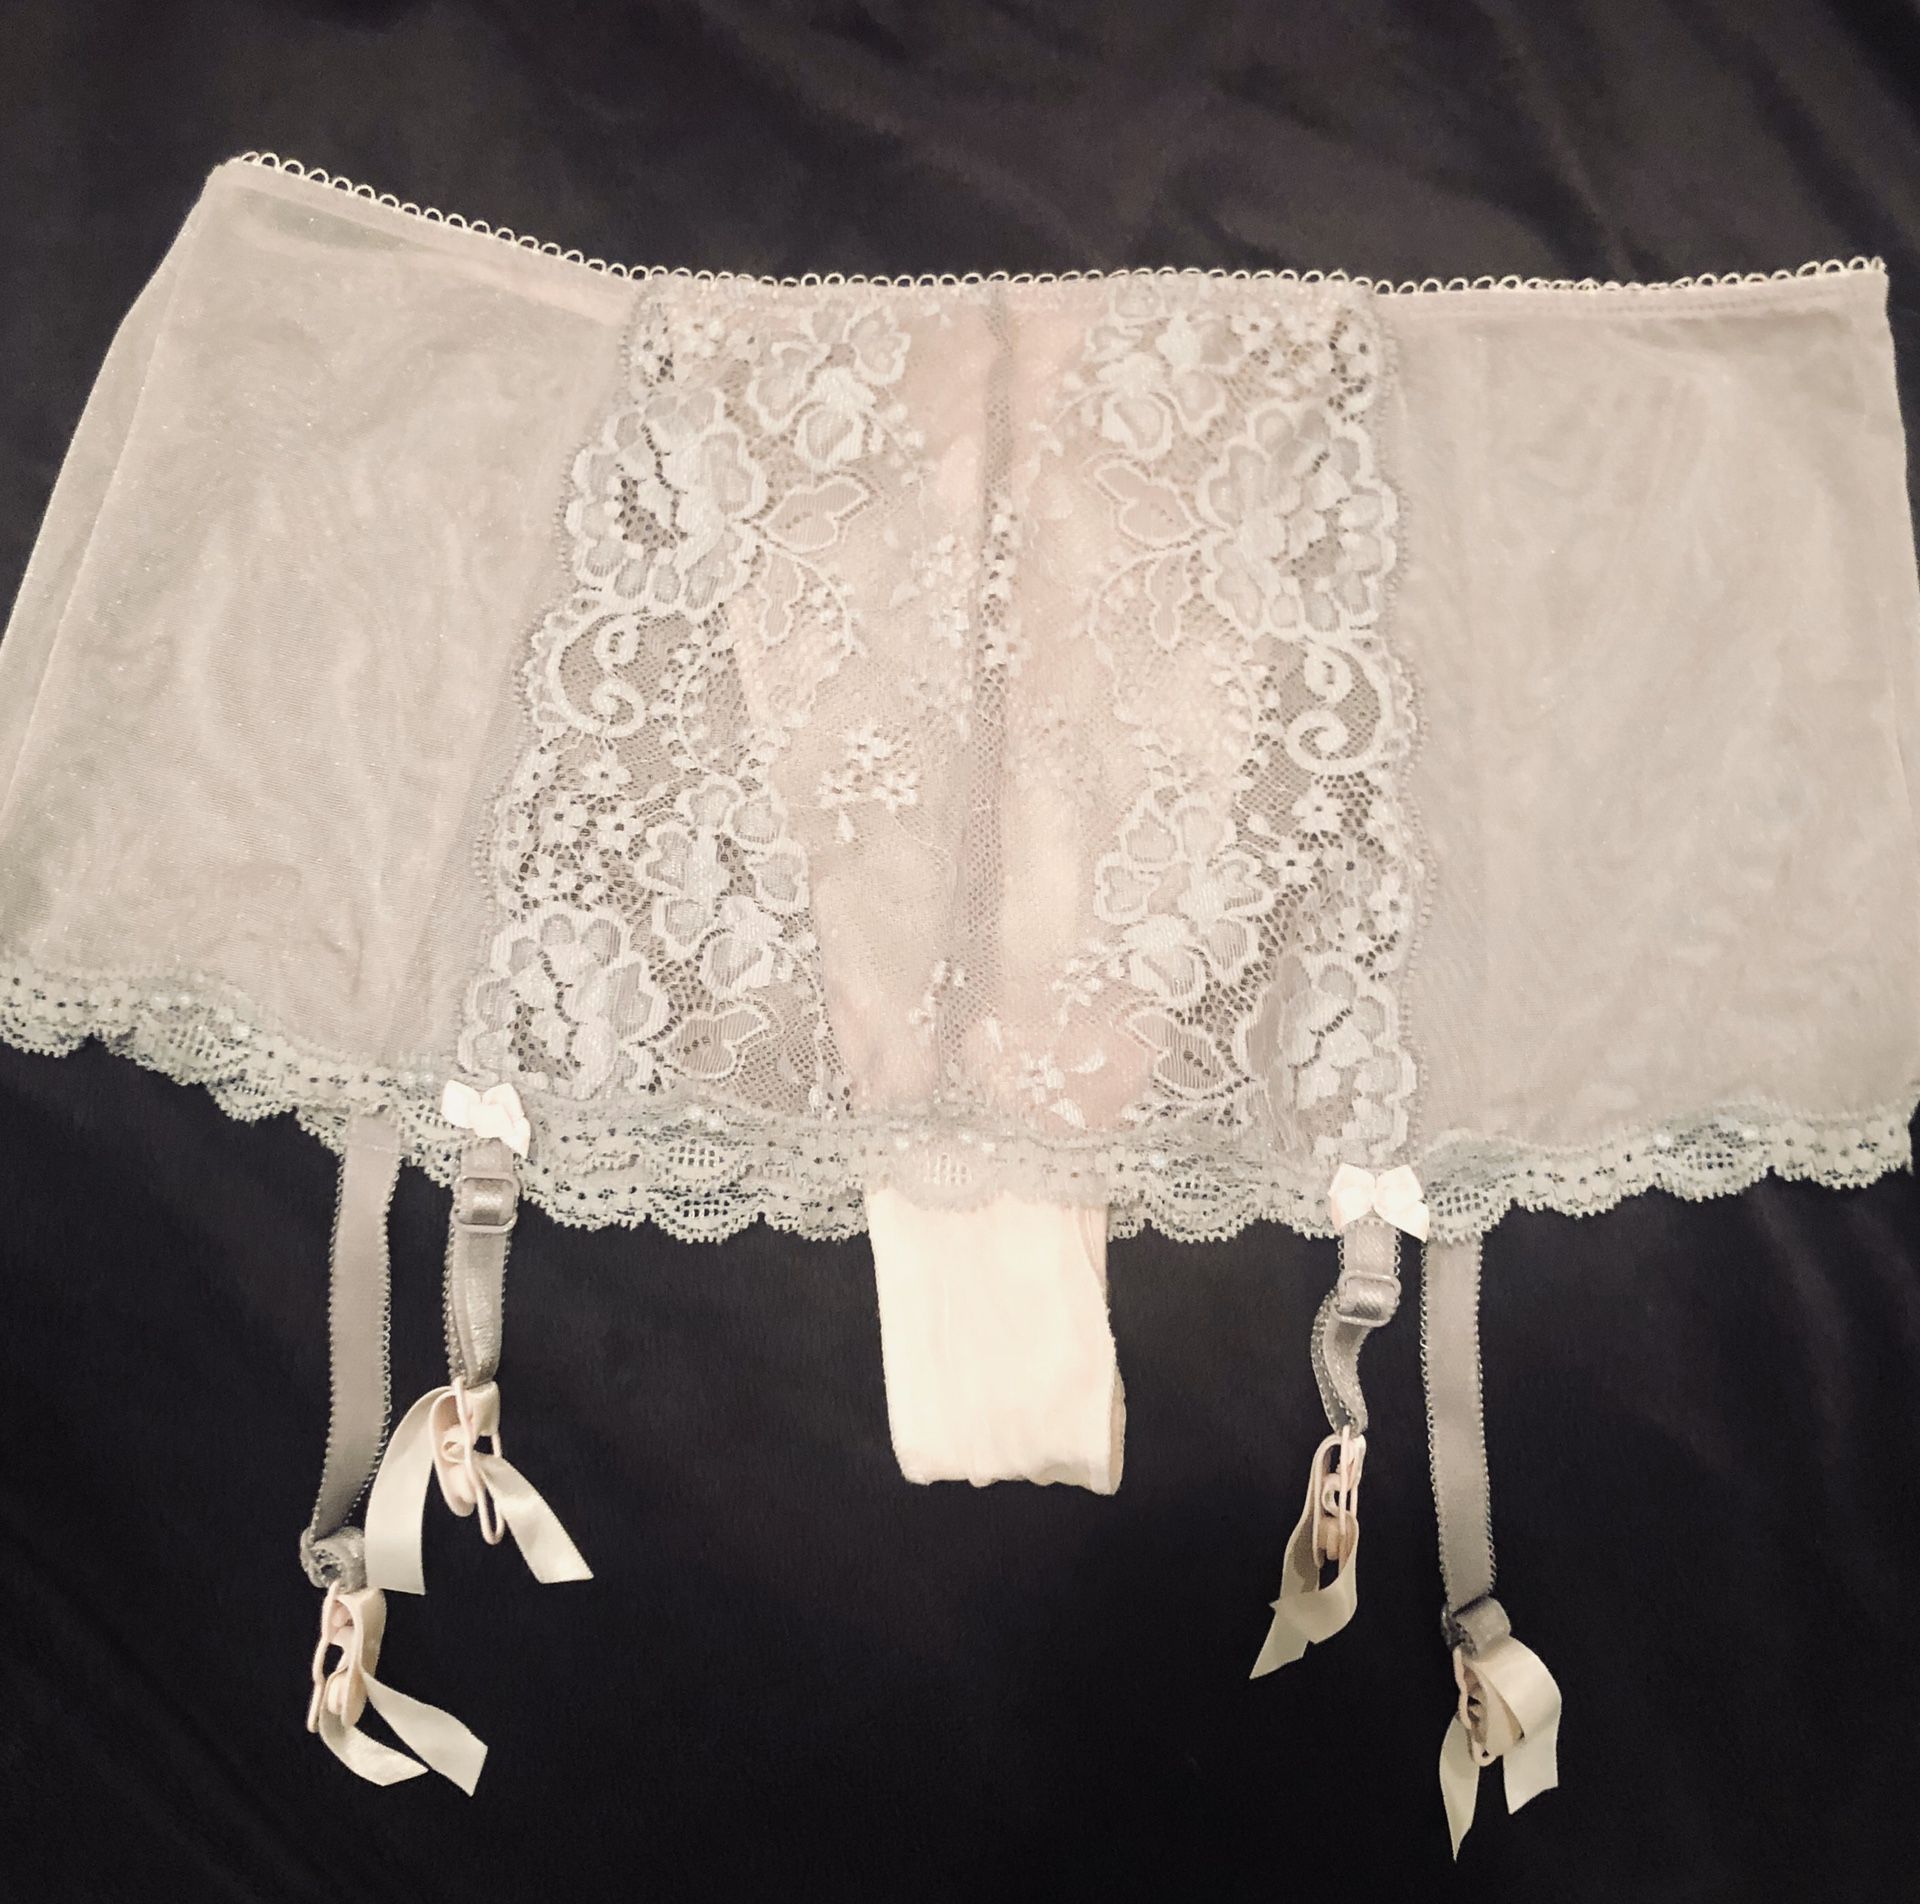 Victoria’s Secret garter belt